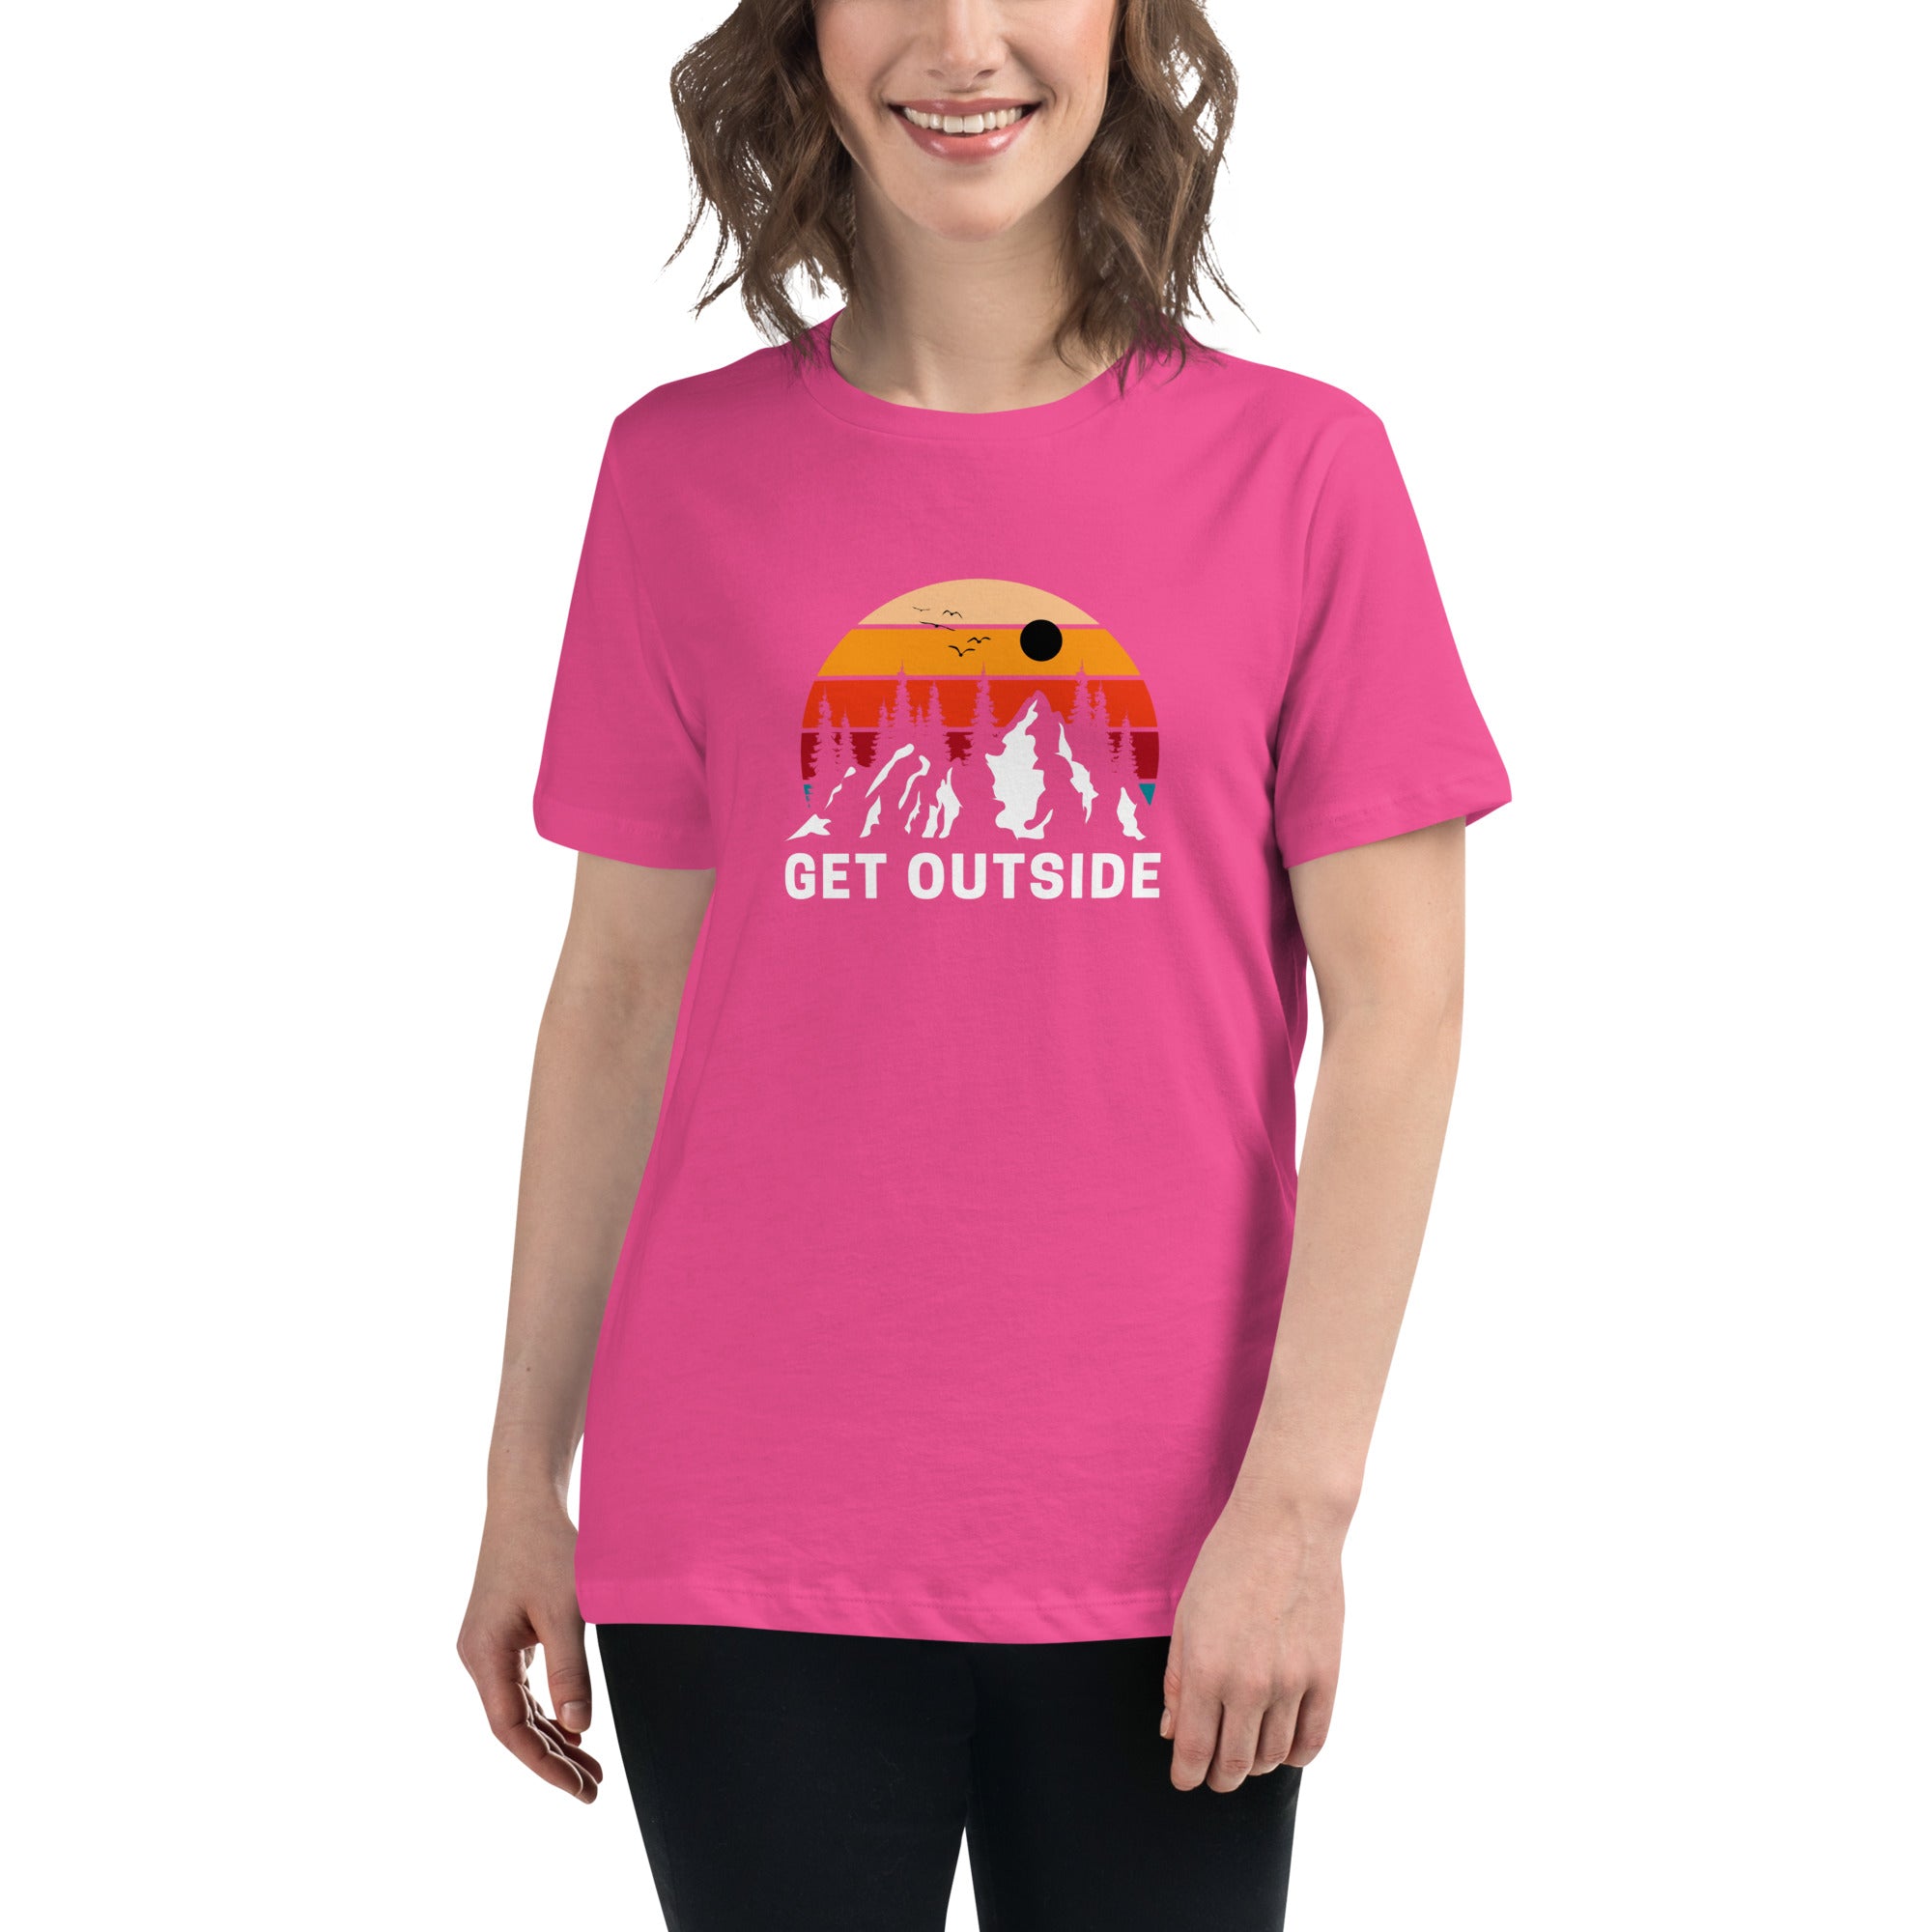 Get Outside Women's Premium T-Shirt